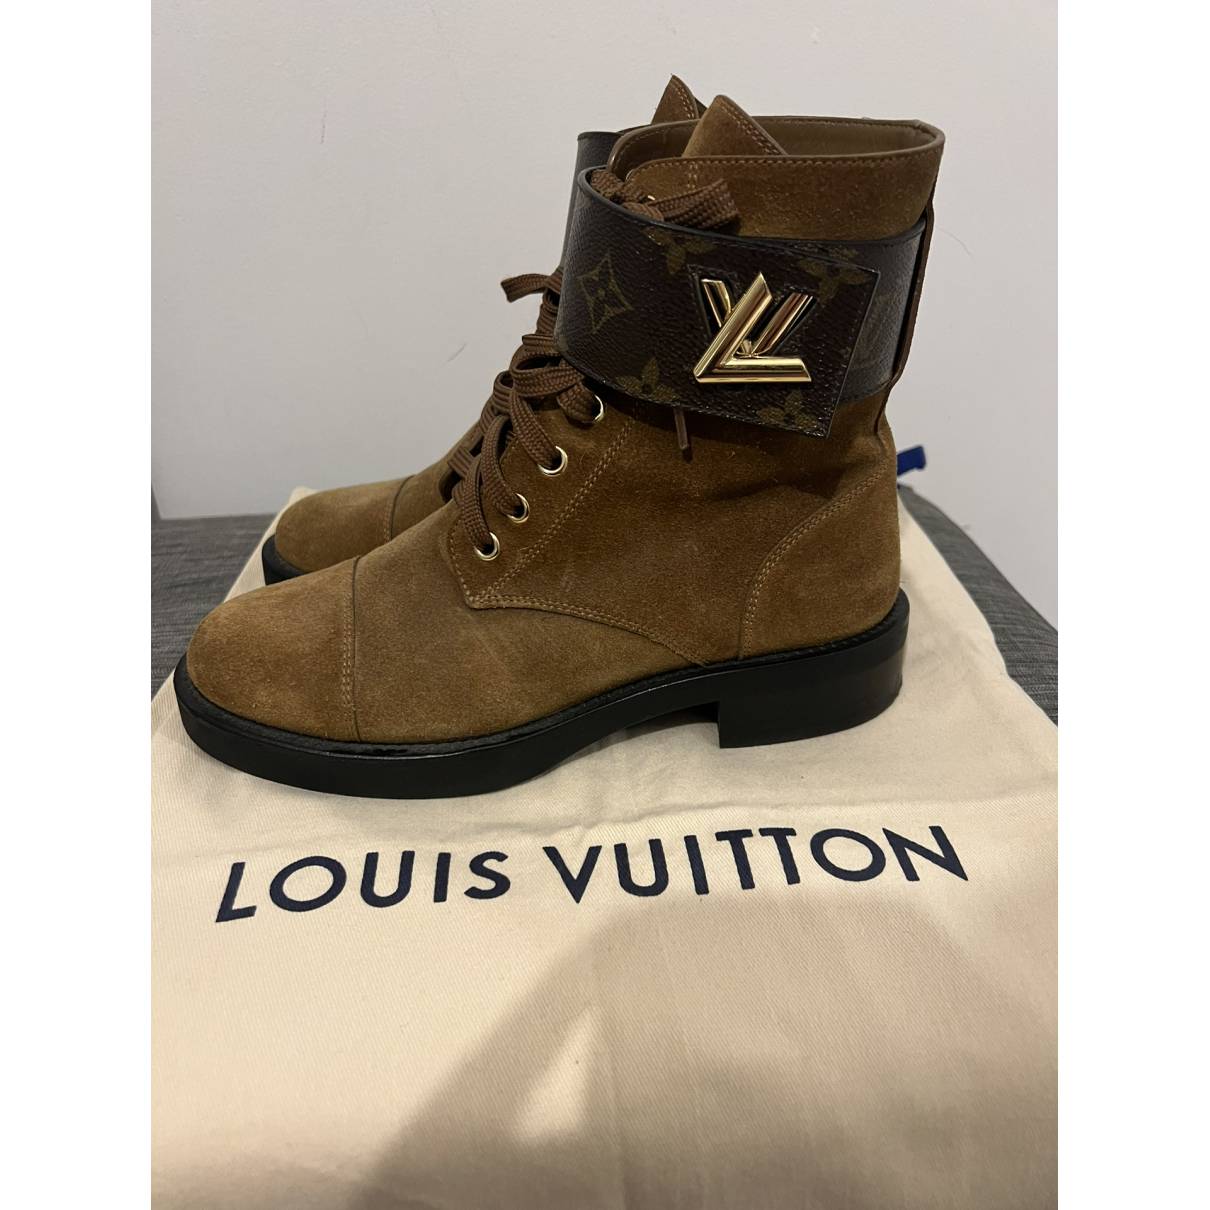 Louis Vuitton Authenticated Wonderland Ankle Boots